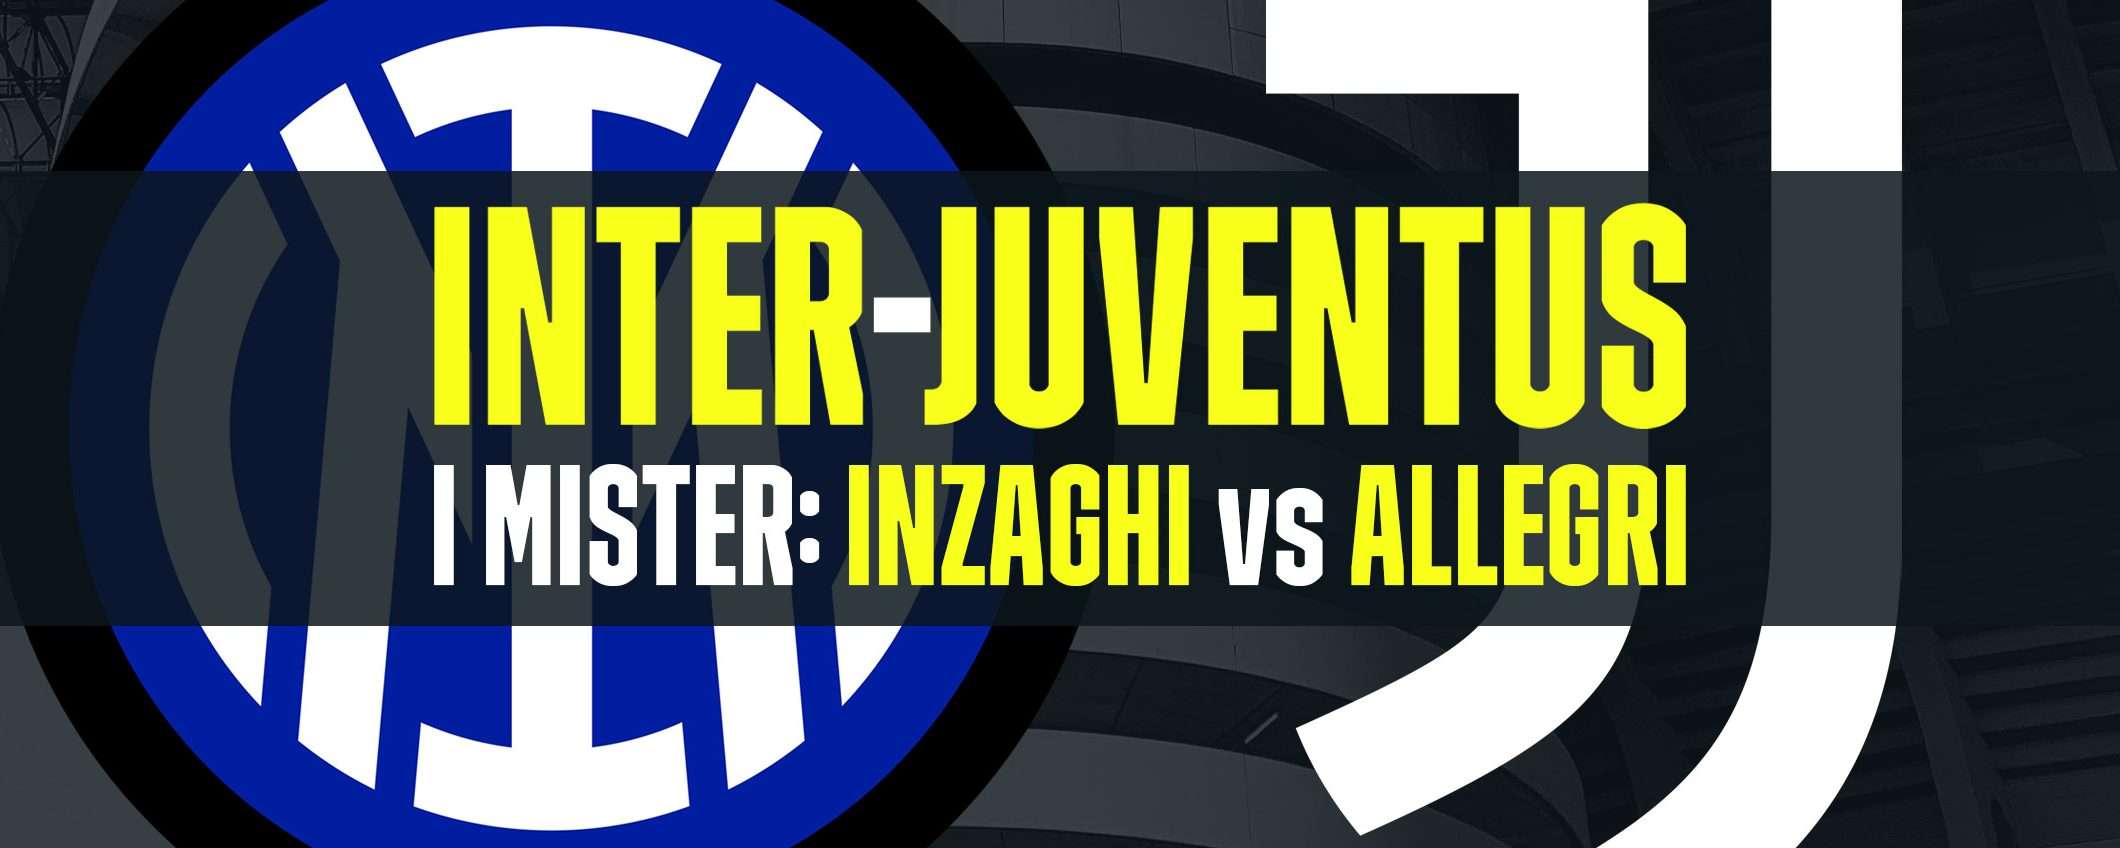 Inter-Juventus è soprattutto Inzaghi-Allegri